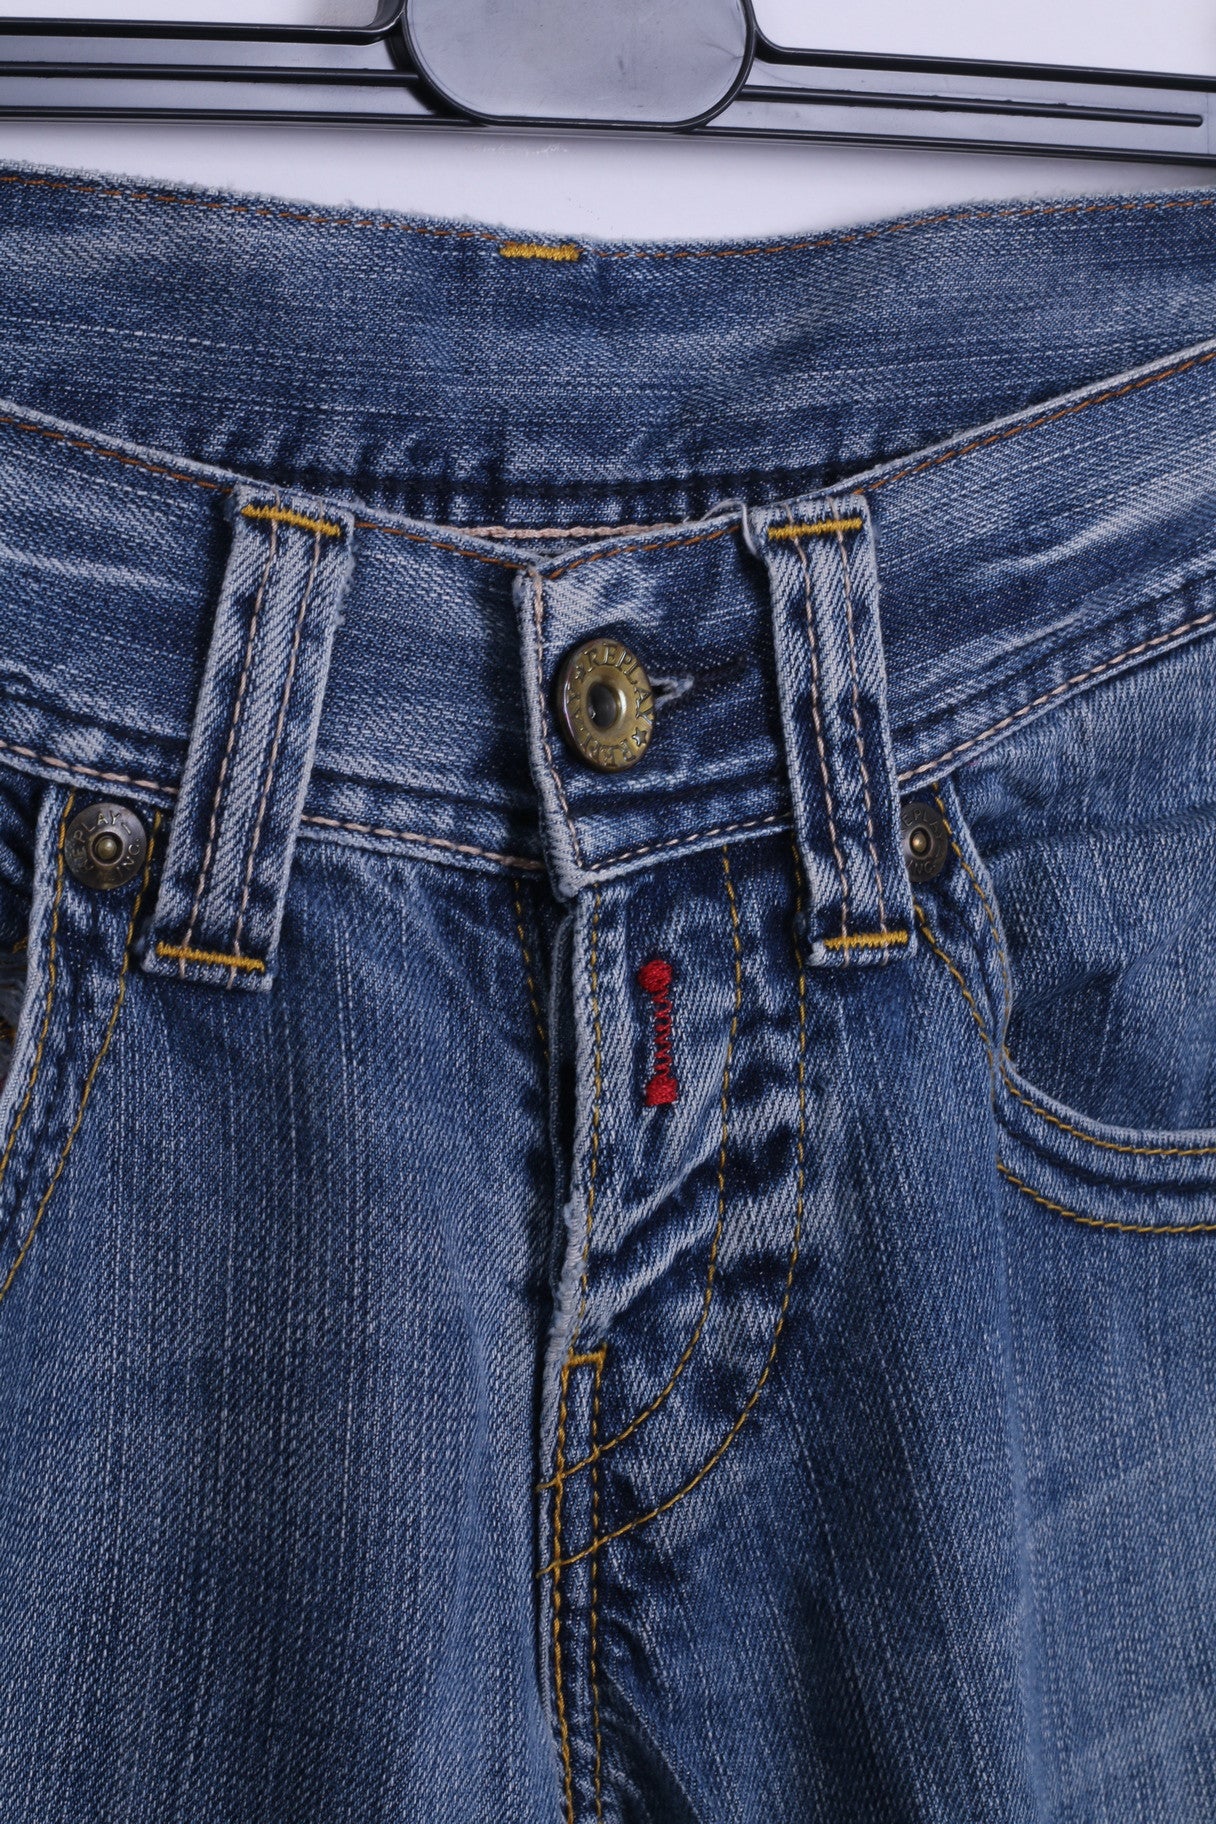 Replay Womens W31 L34 Trousers Denim Jeans Cotton Bootcut